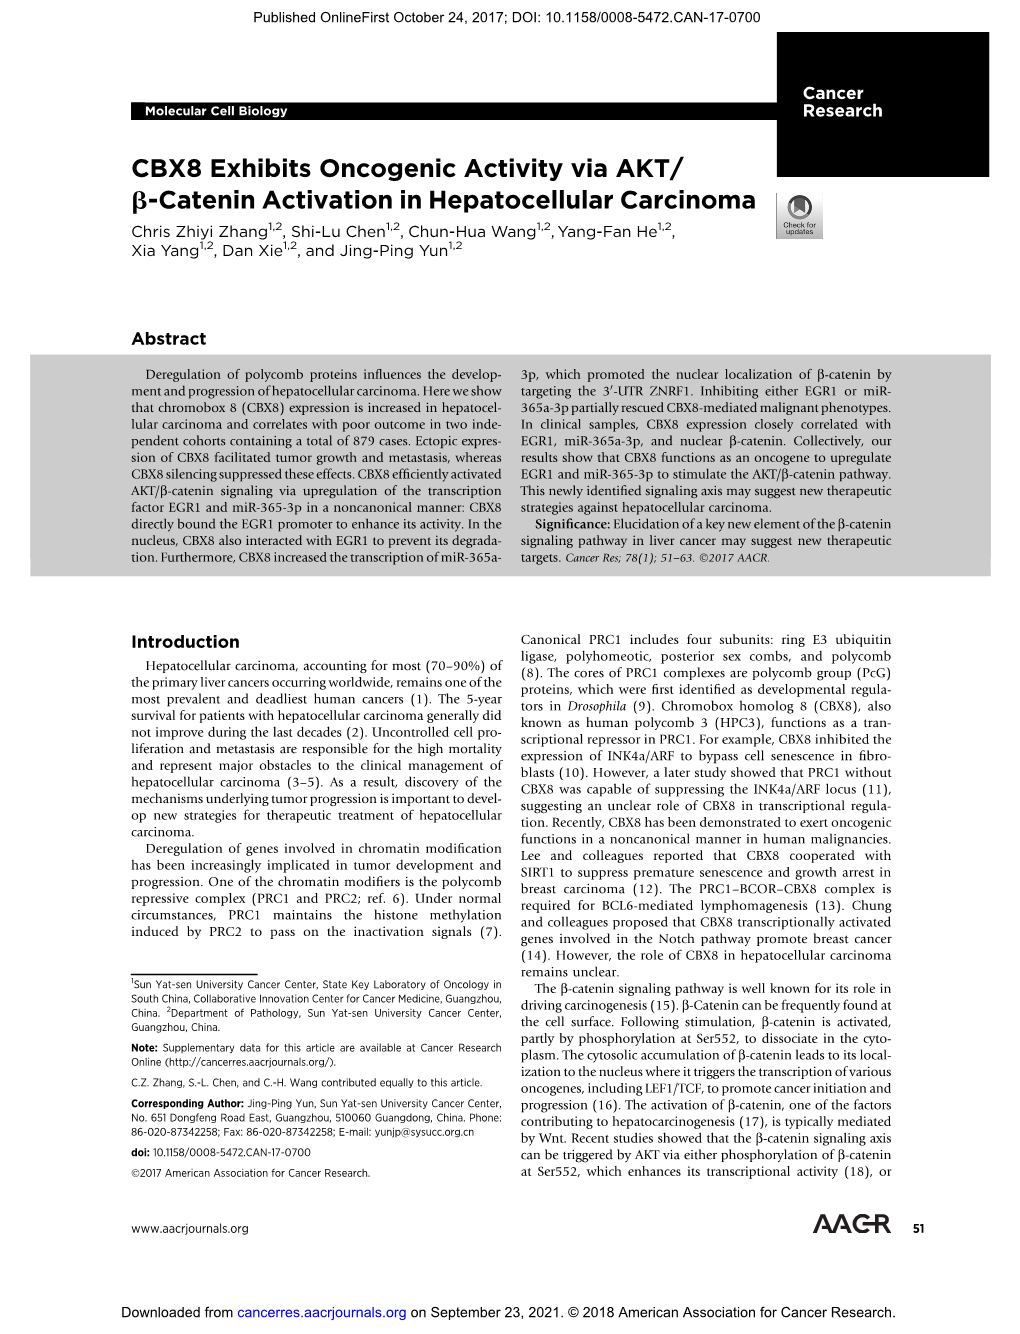 CBX8 Exhibits Oncogenic Activity Via AKT/ B-Catenin Activation in Hepatocellular Carcinoma